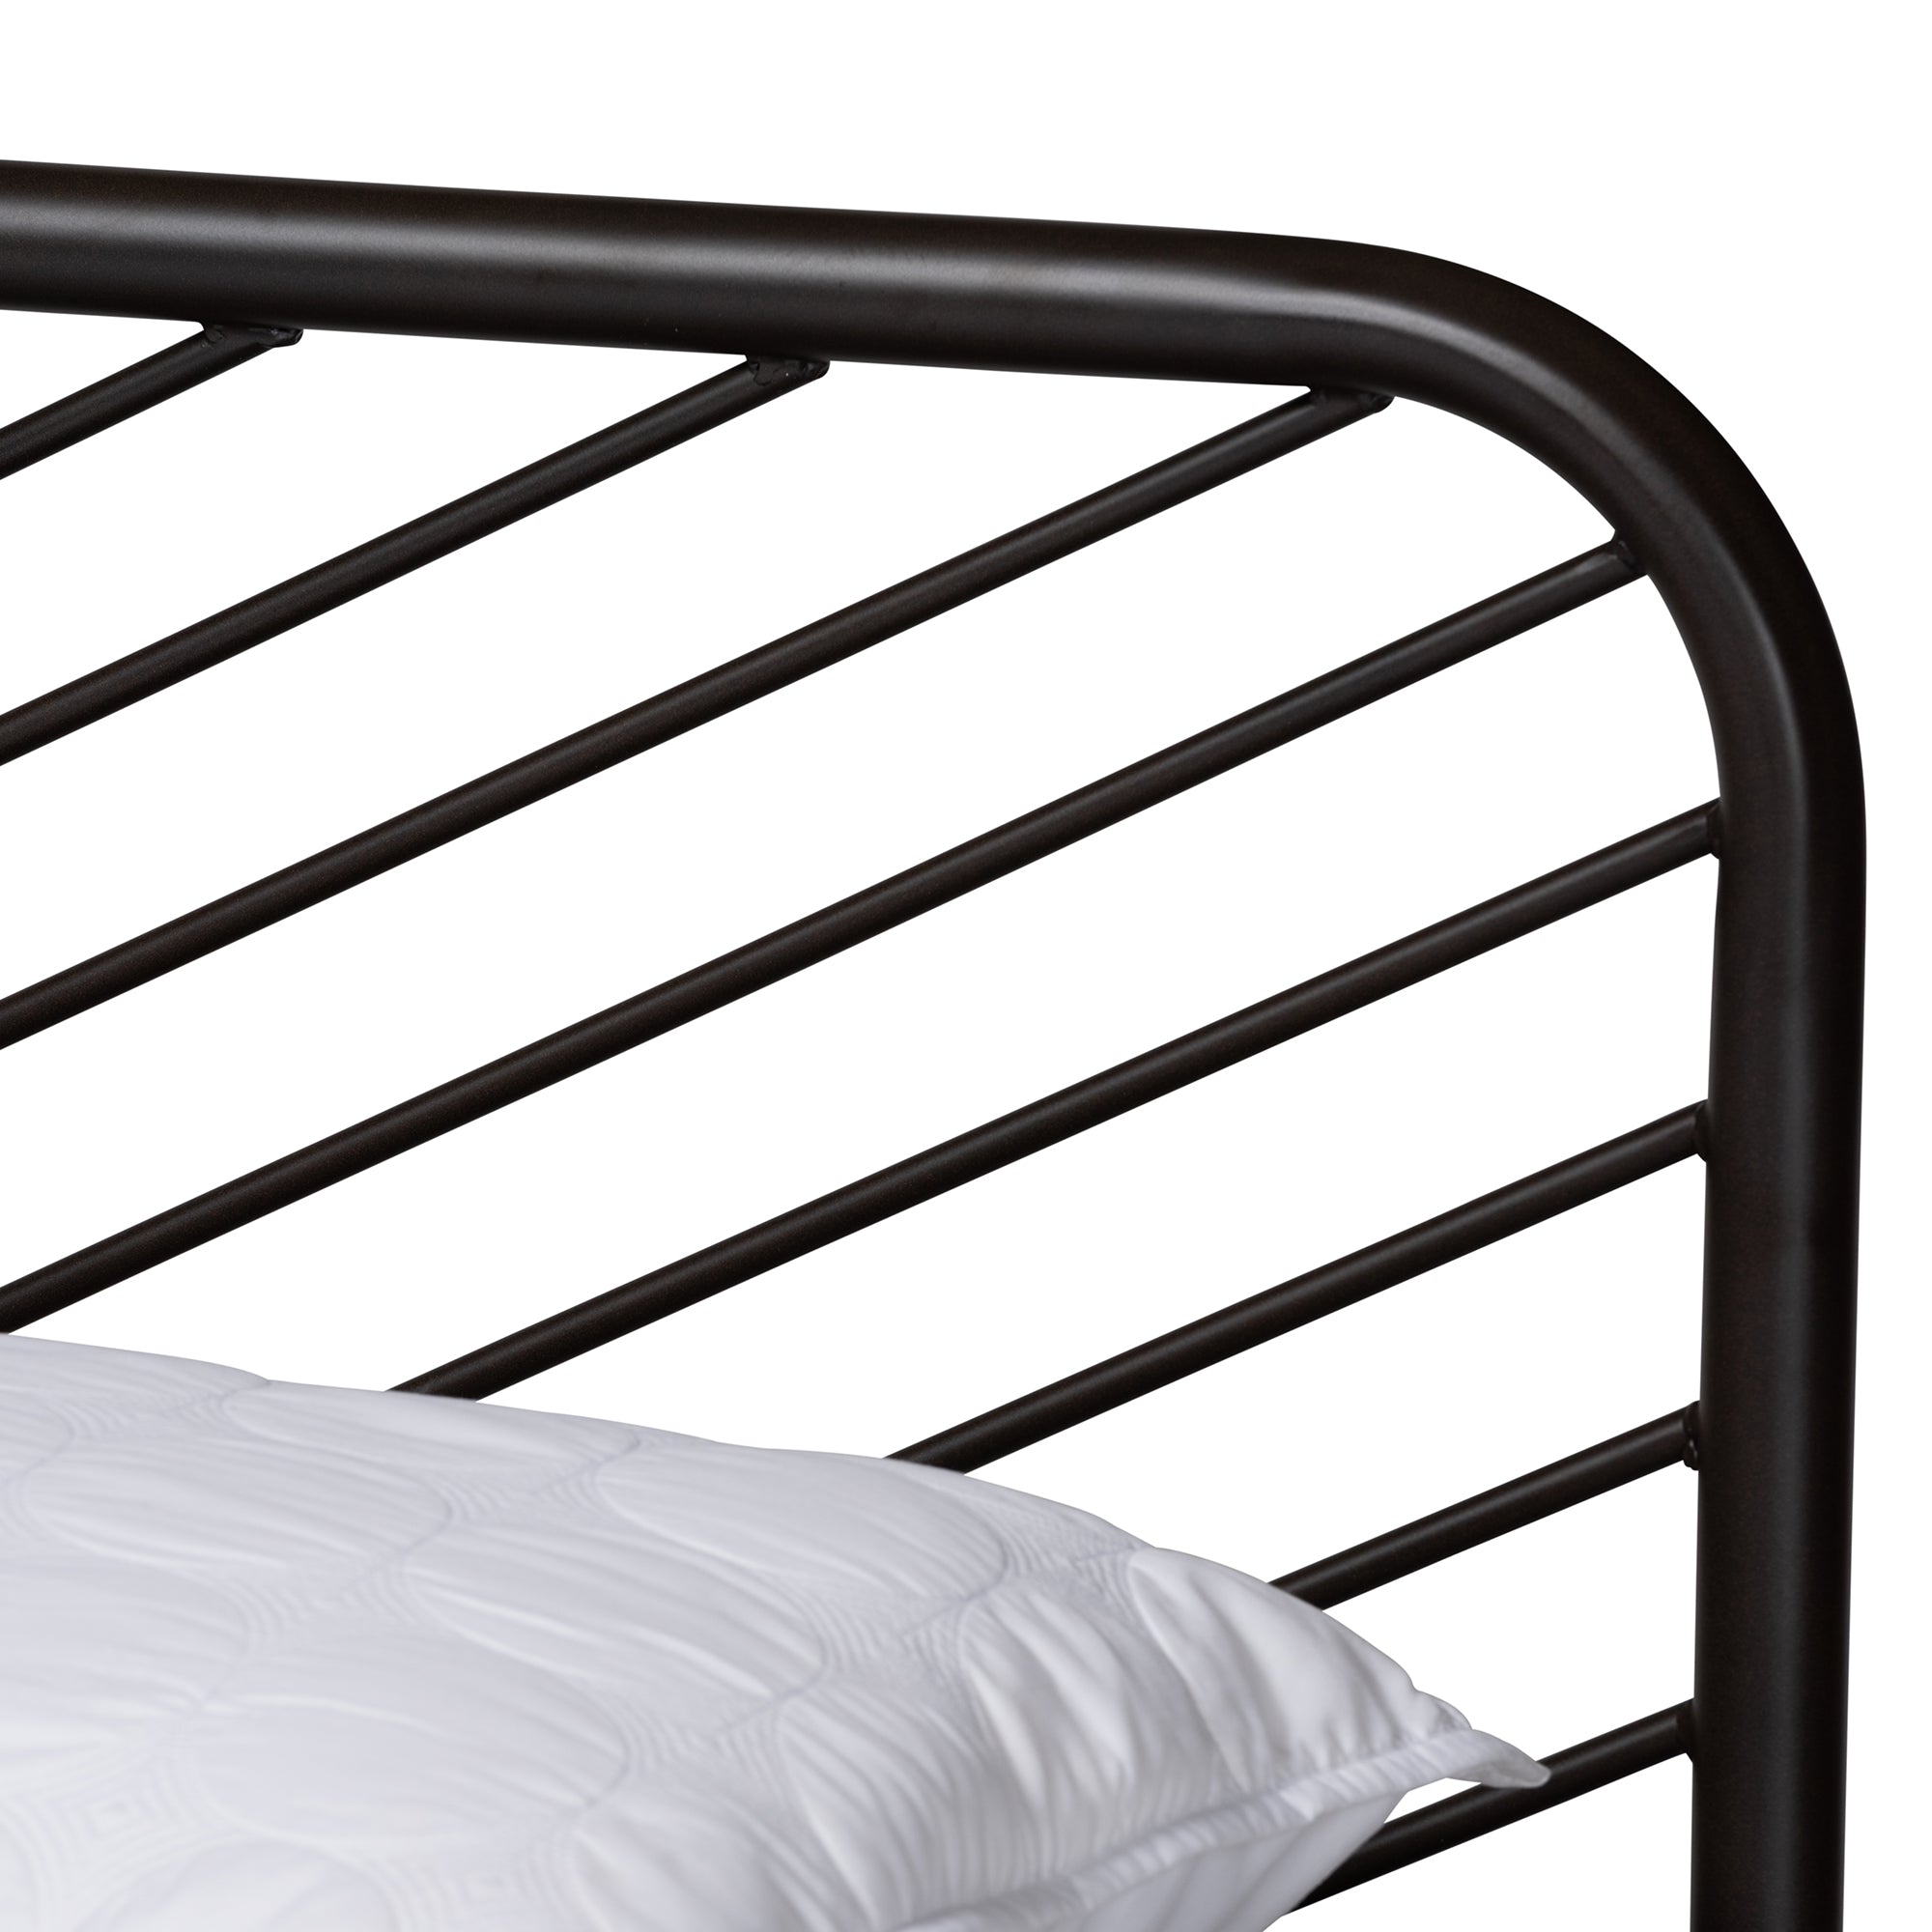 Dora Modern Bed-Bed-Baxton Studio - WI-Wall2Wall Furnishings